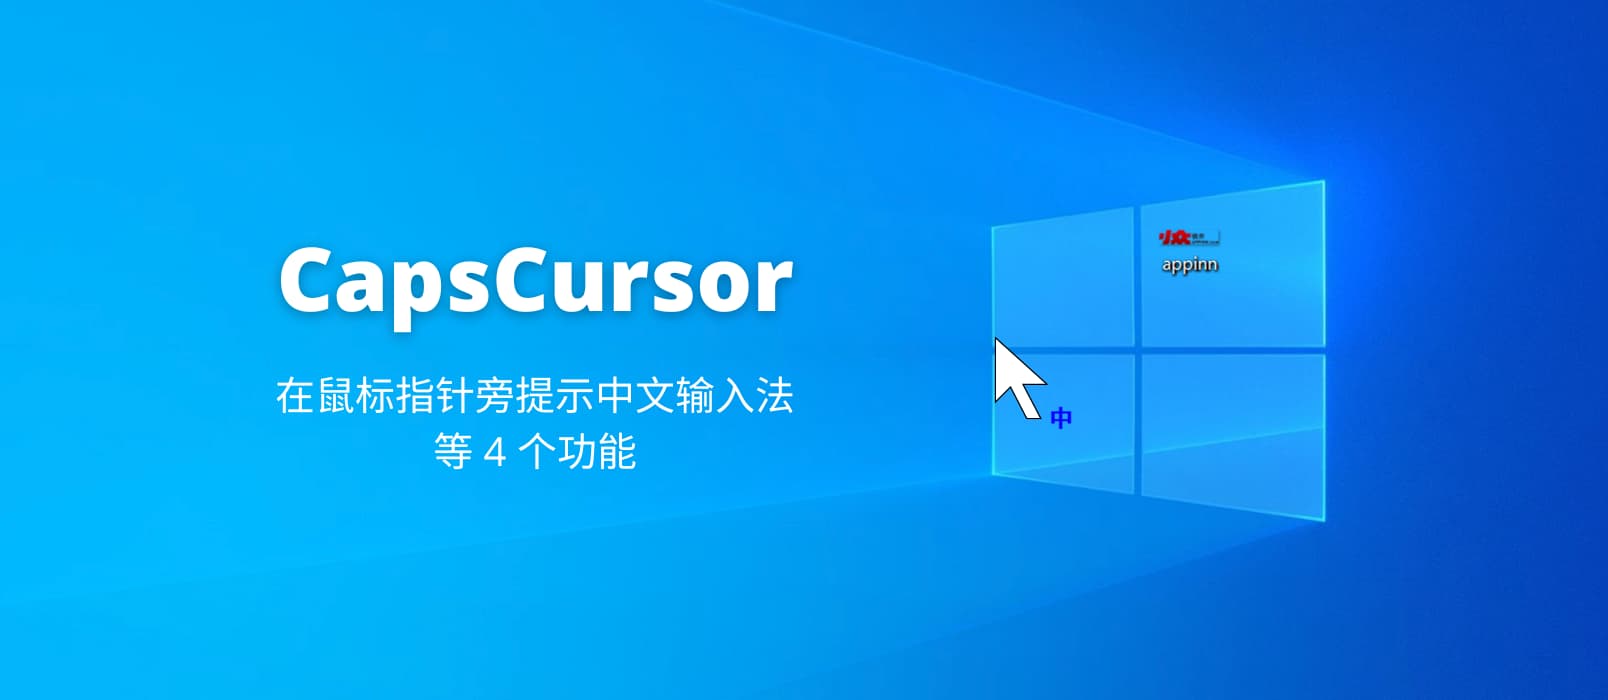 CapsCursor – 大小写键 4 功能辅助工具：在鼠标指针旁为中文输入法添加标记、[Windows]